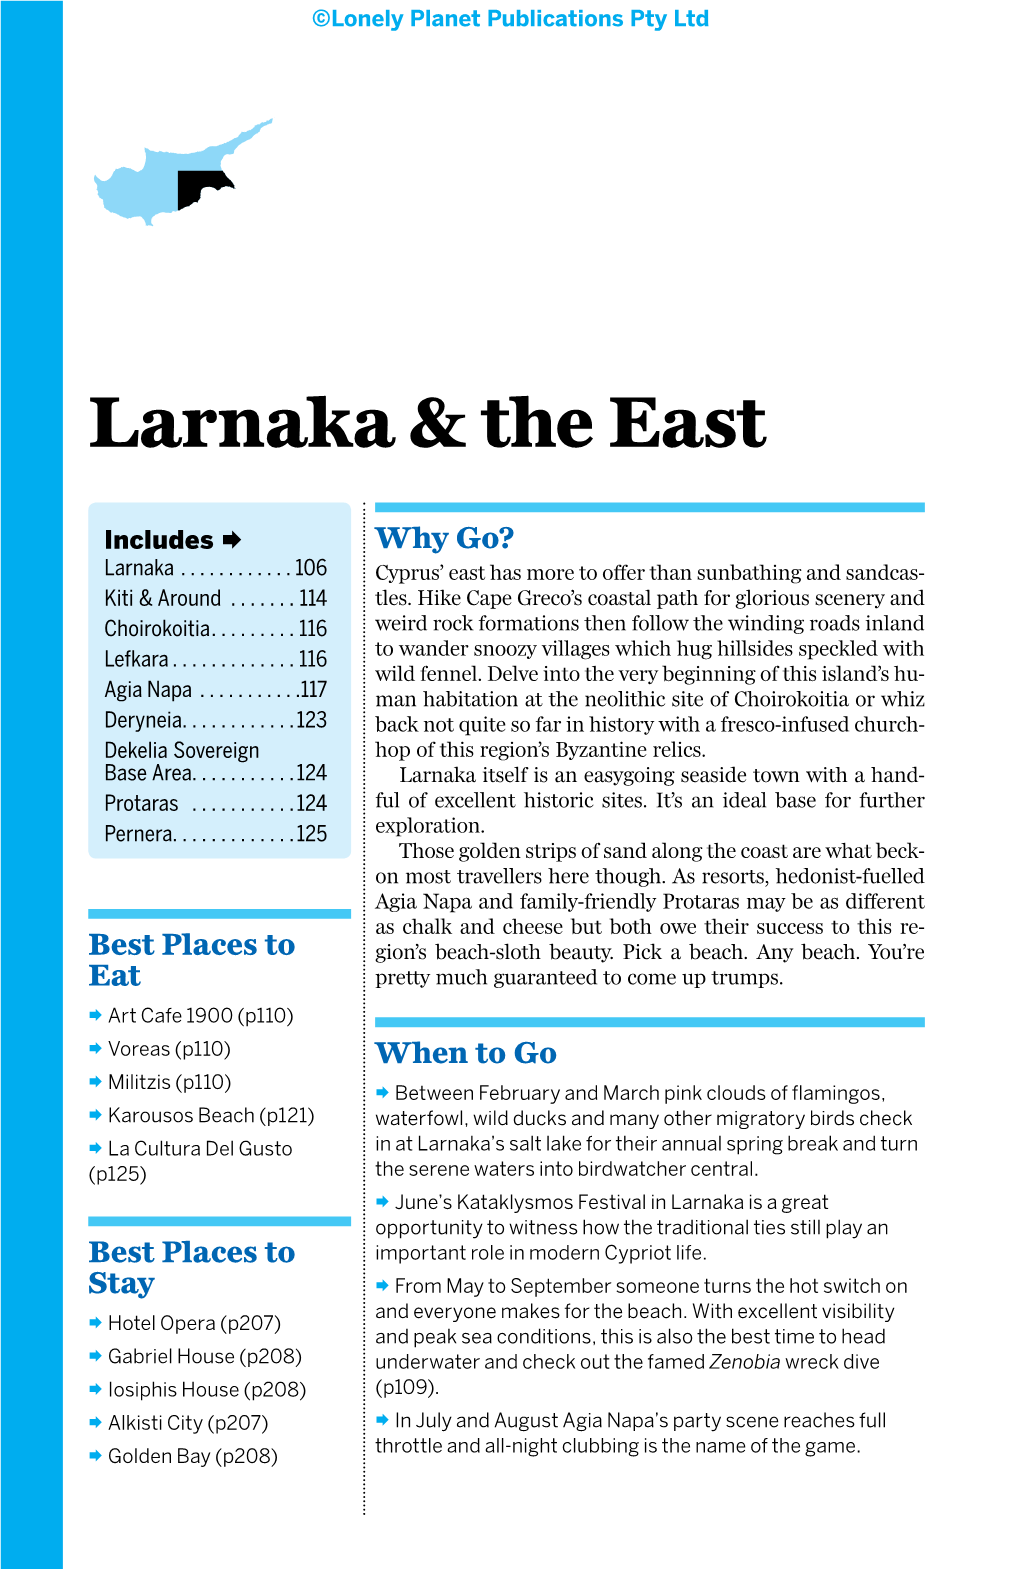 Larnaka & the East